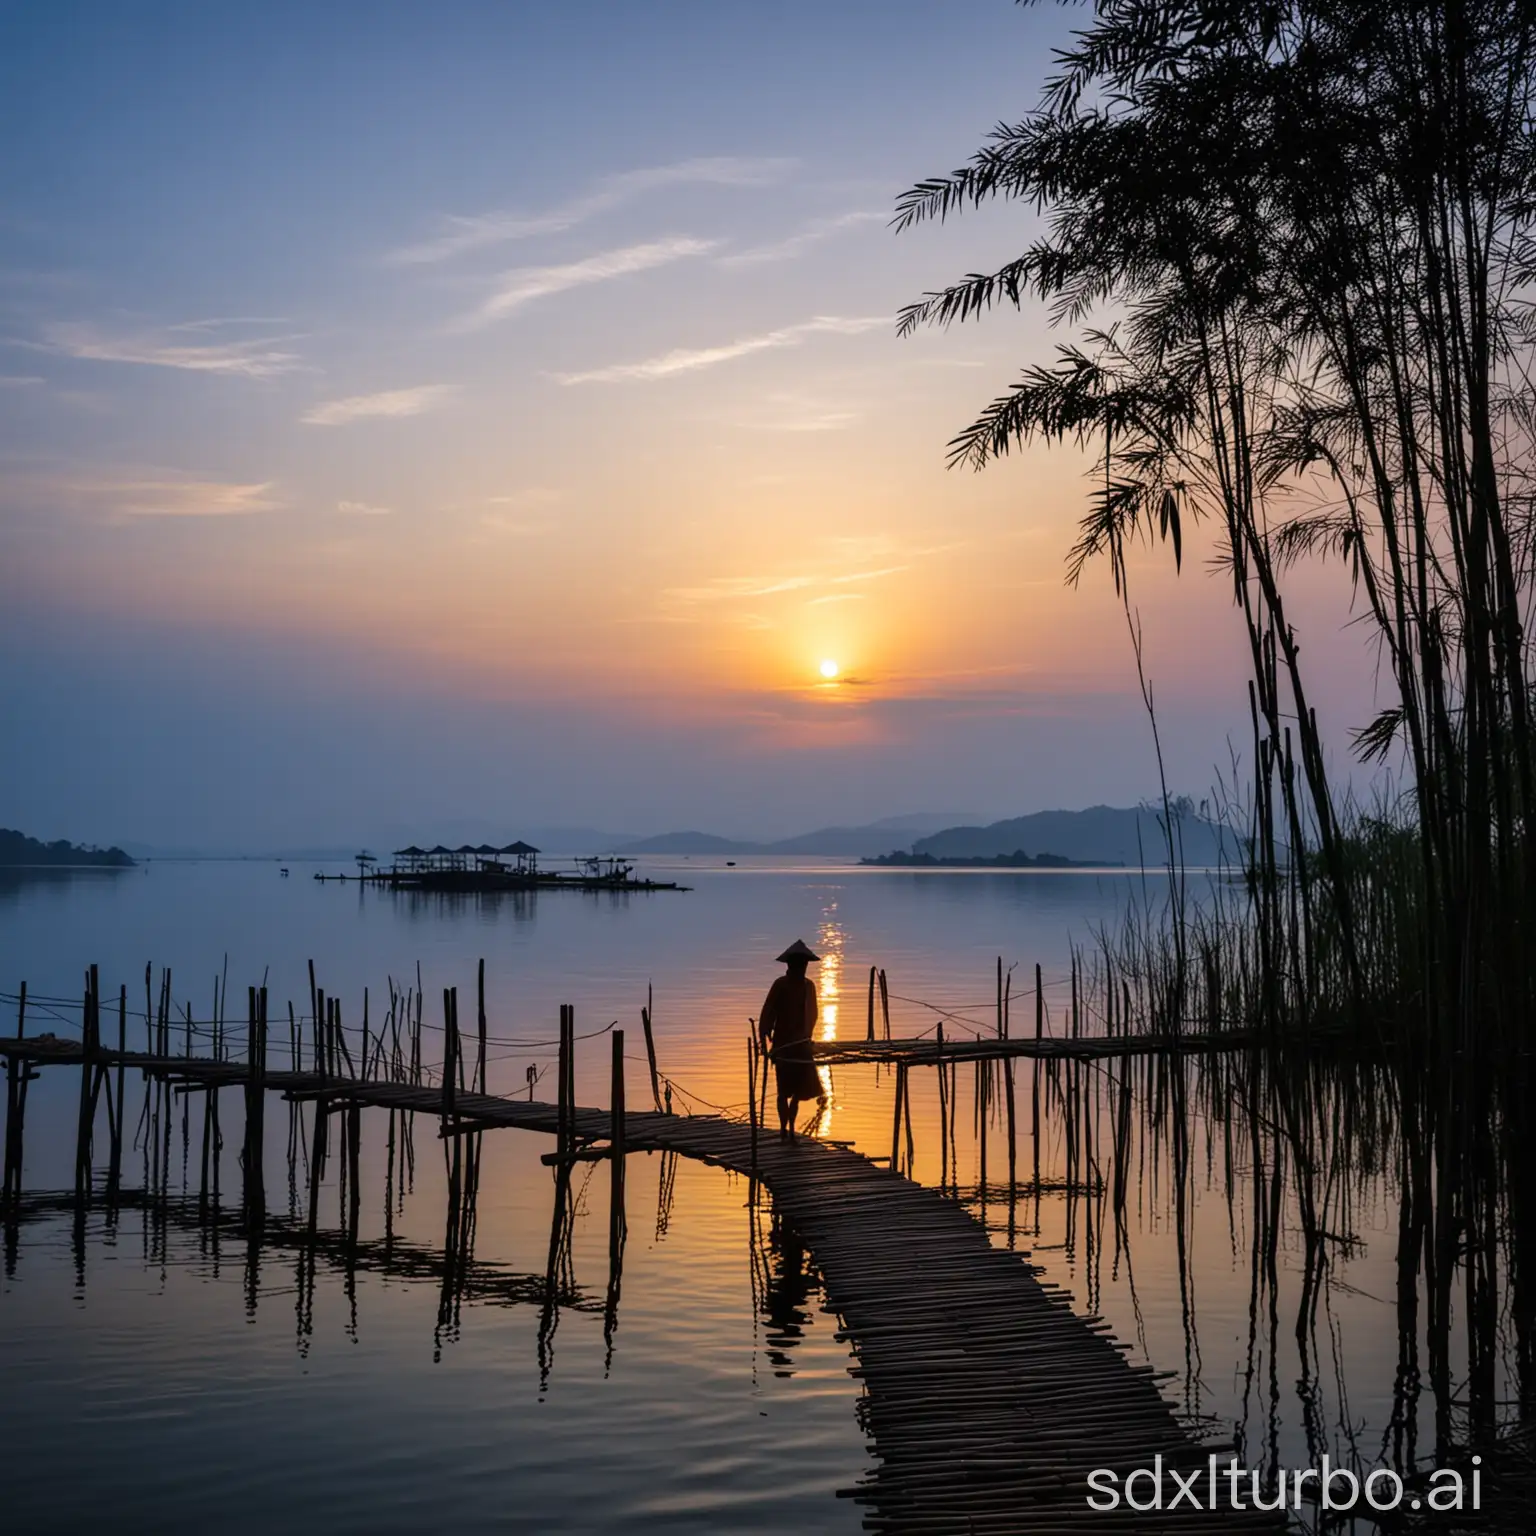 Fisherman-Walking-on-Bamboo-Wharf-by-Lake-at-Blue-Hour